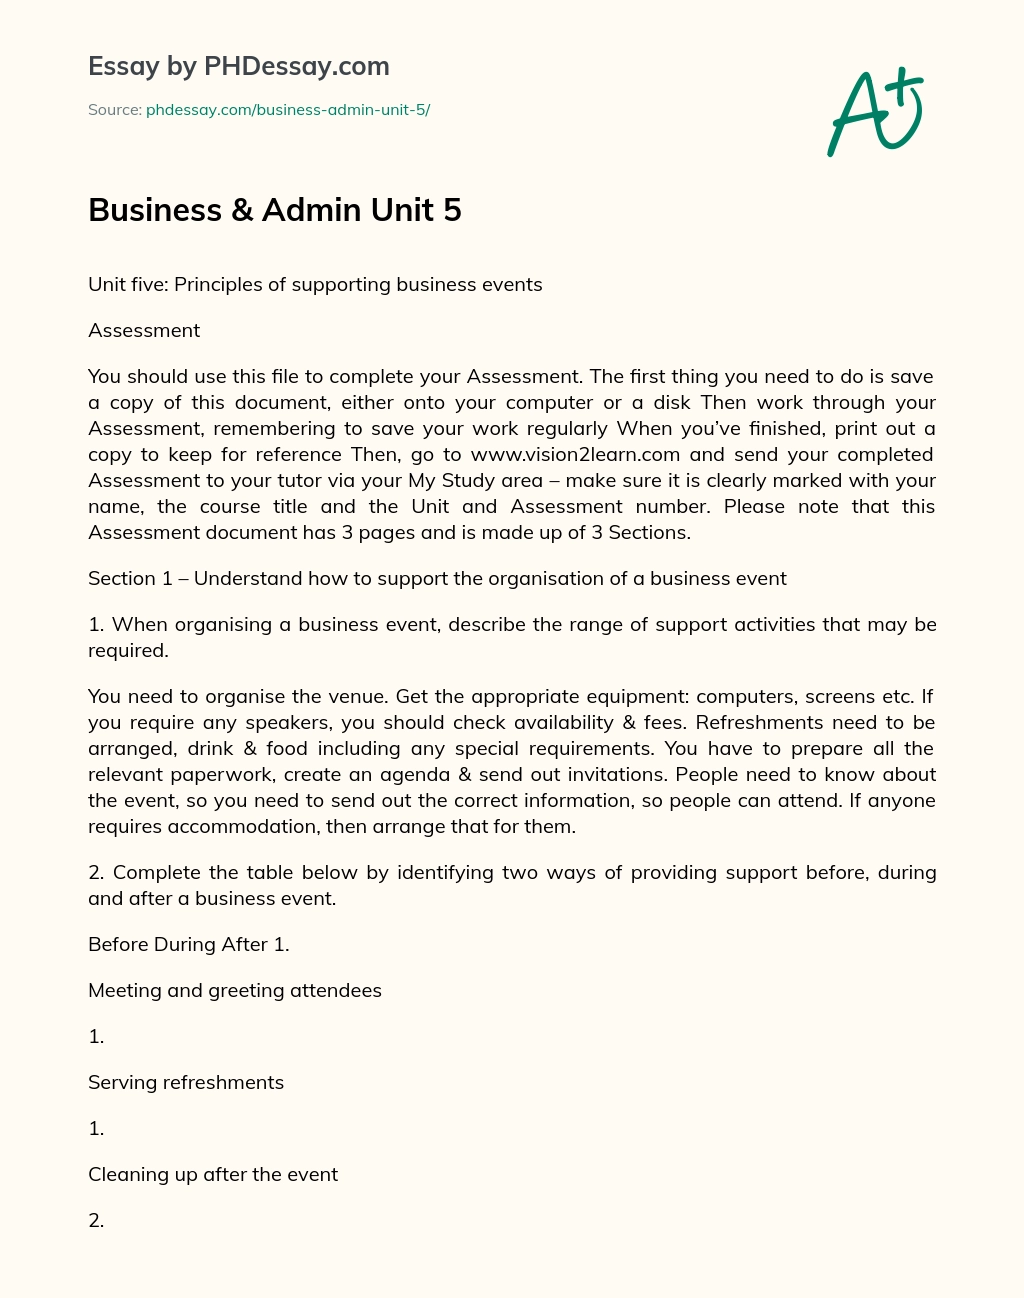 Business & Admin Unit 5 essay